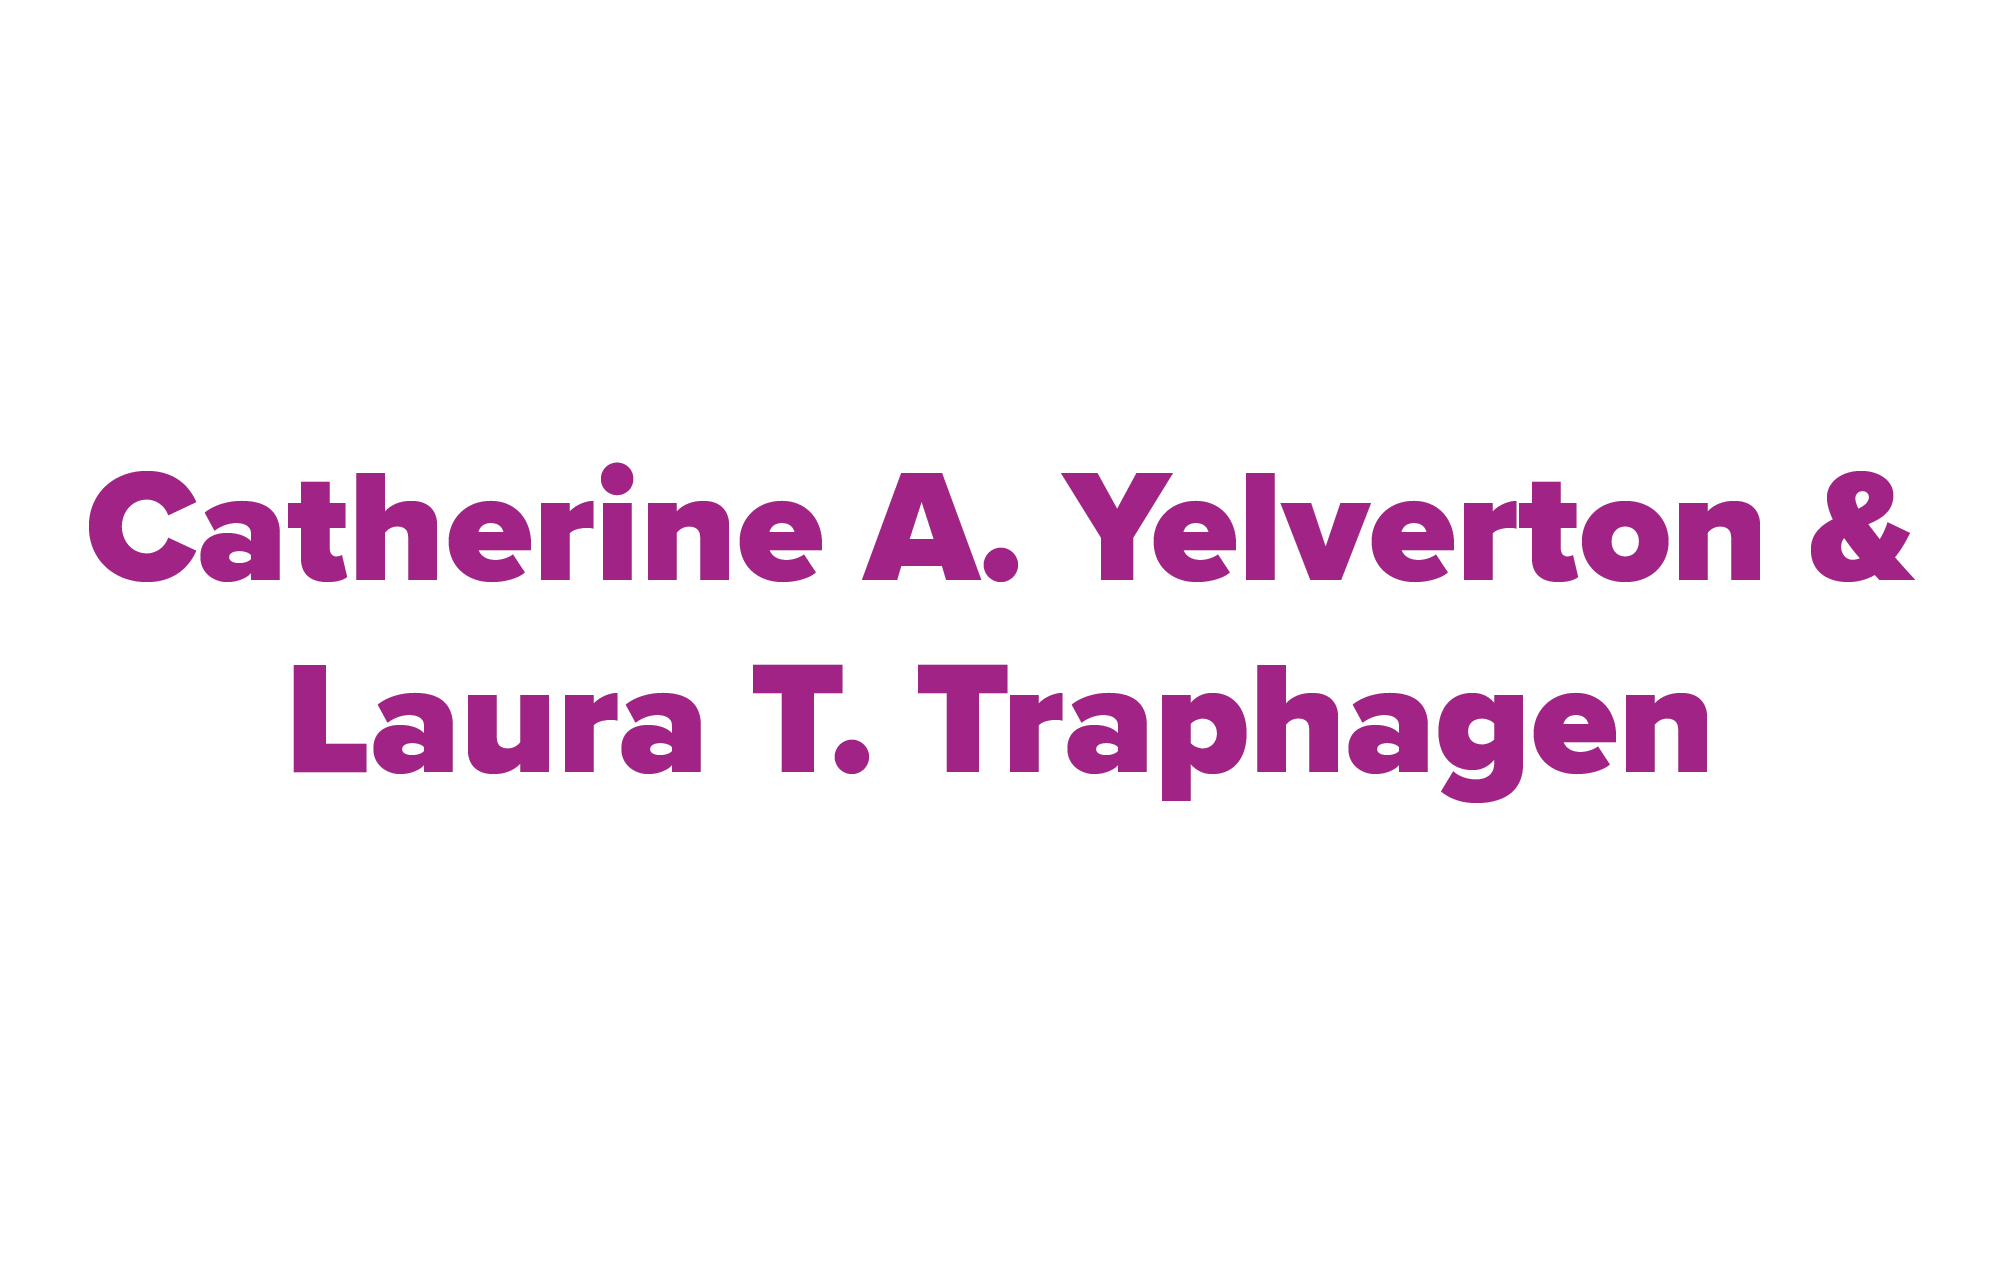 Catherine A. Yelverton & Laura T. Traphagen